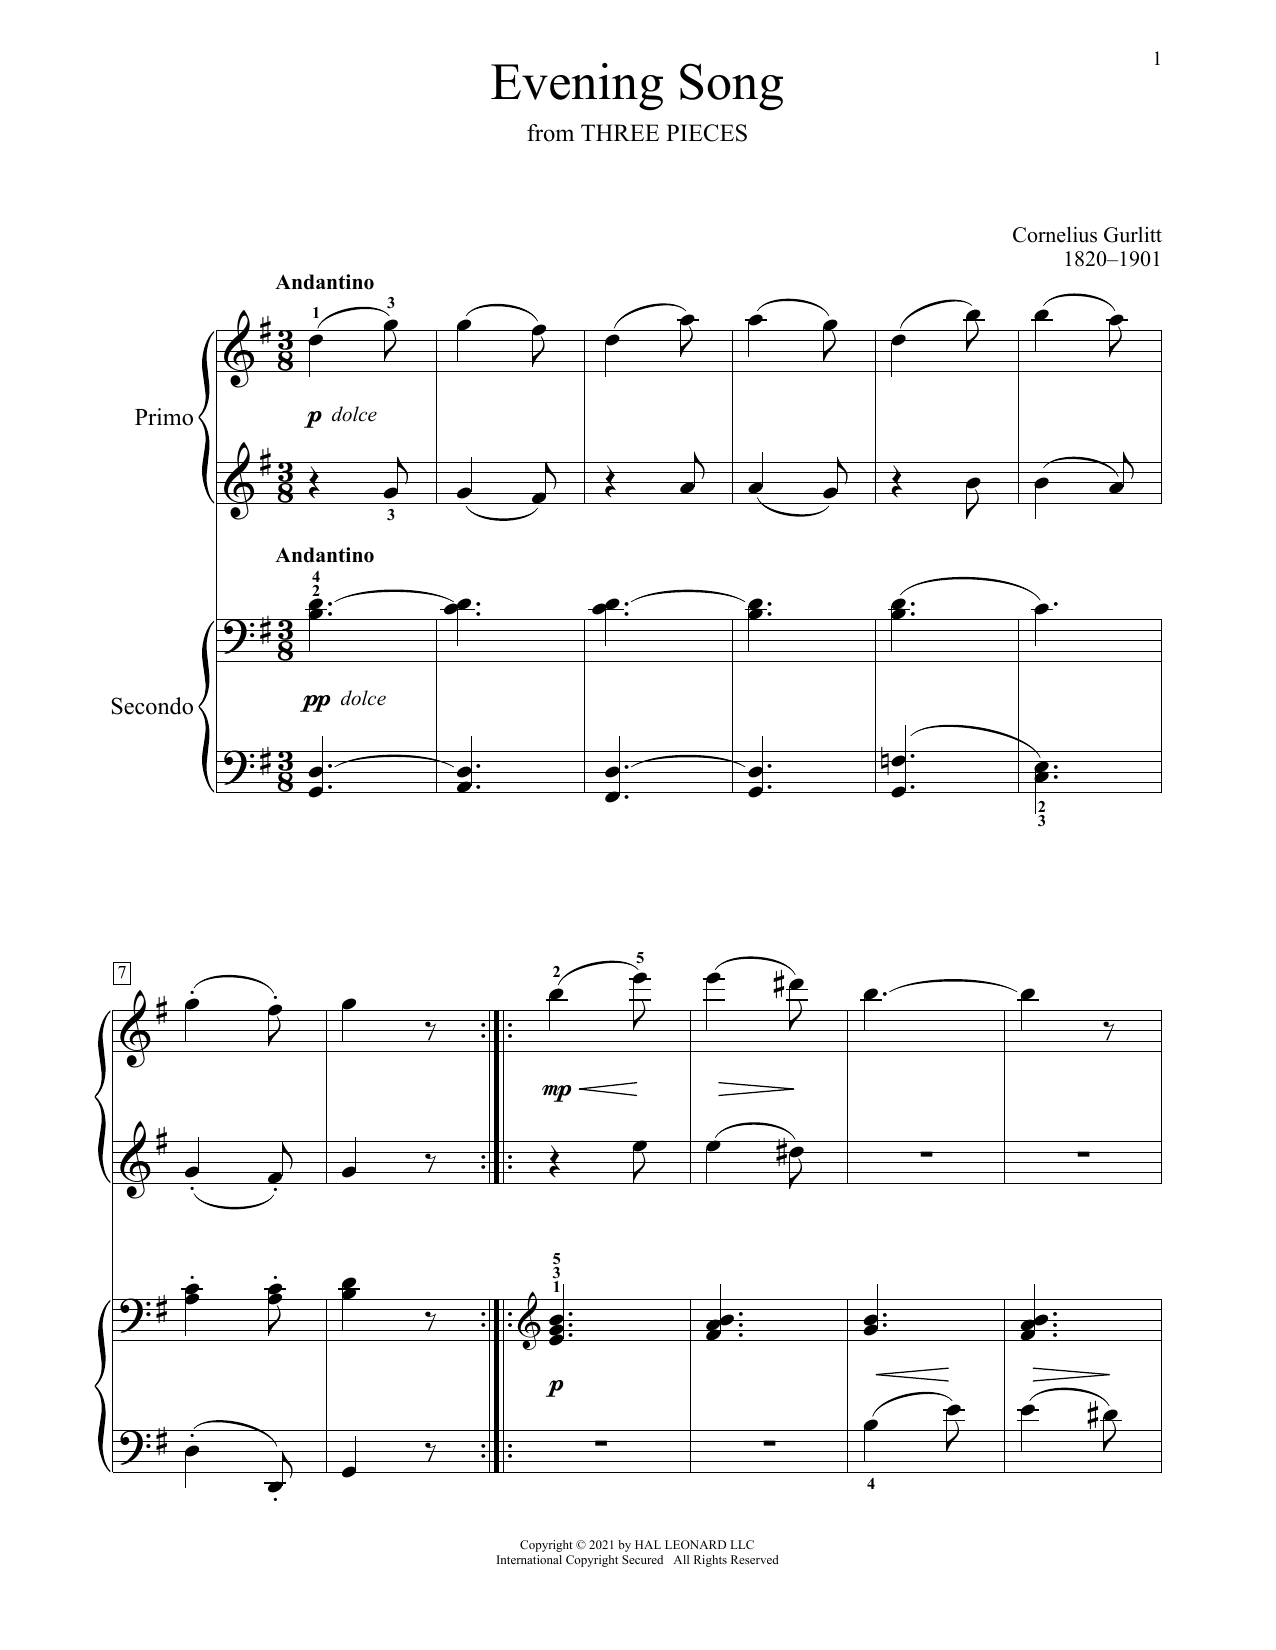 Download Cornelius Gurlitt Evening Song (From Three Pieces) Sheet Music